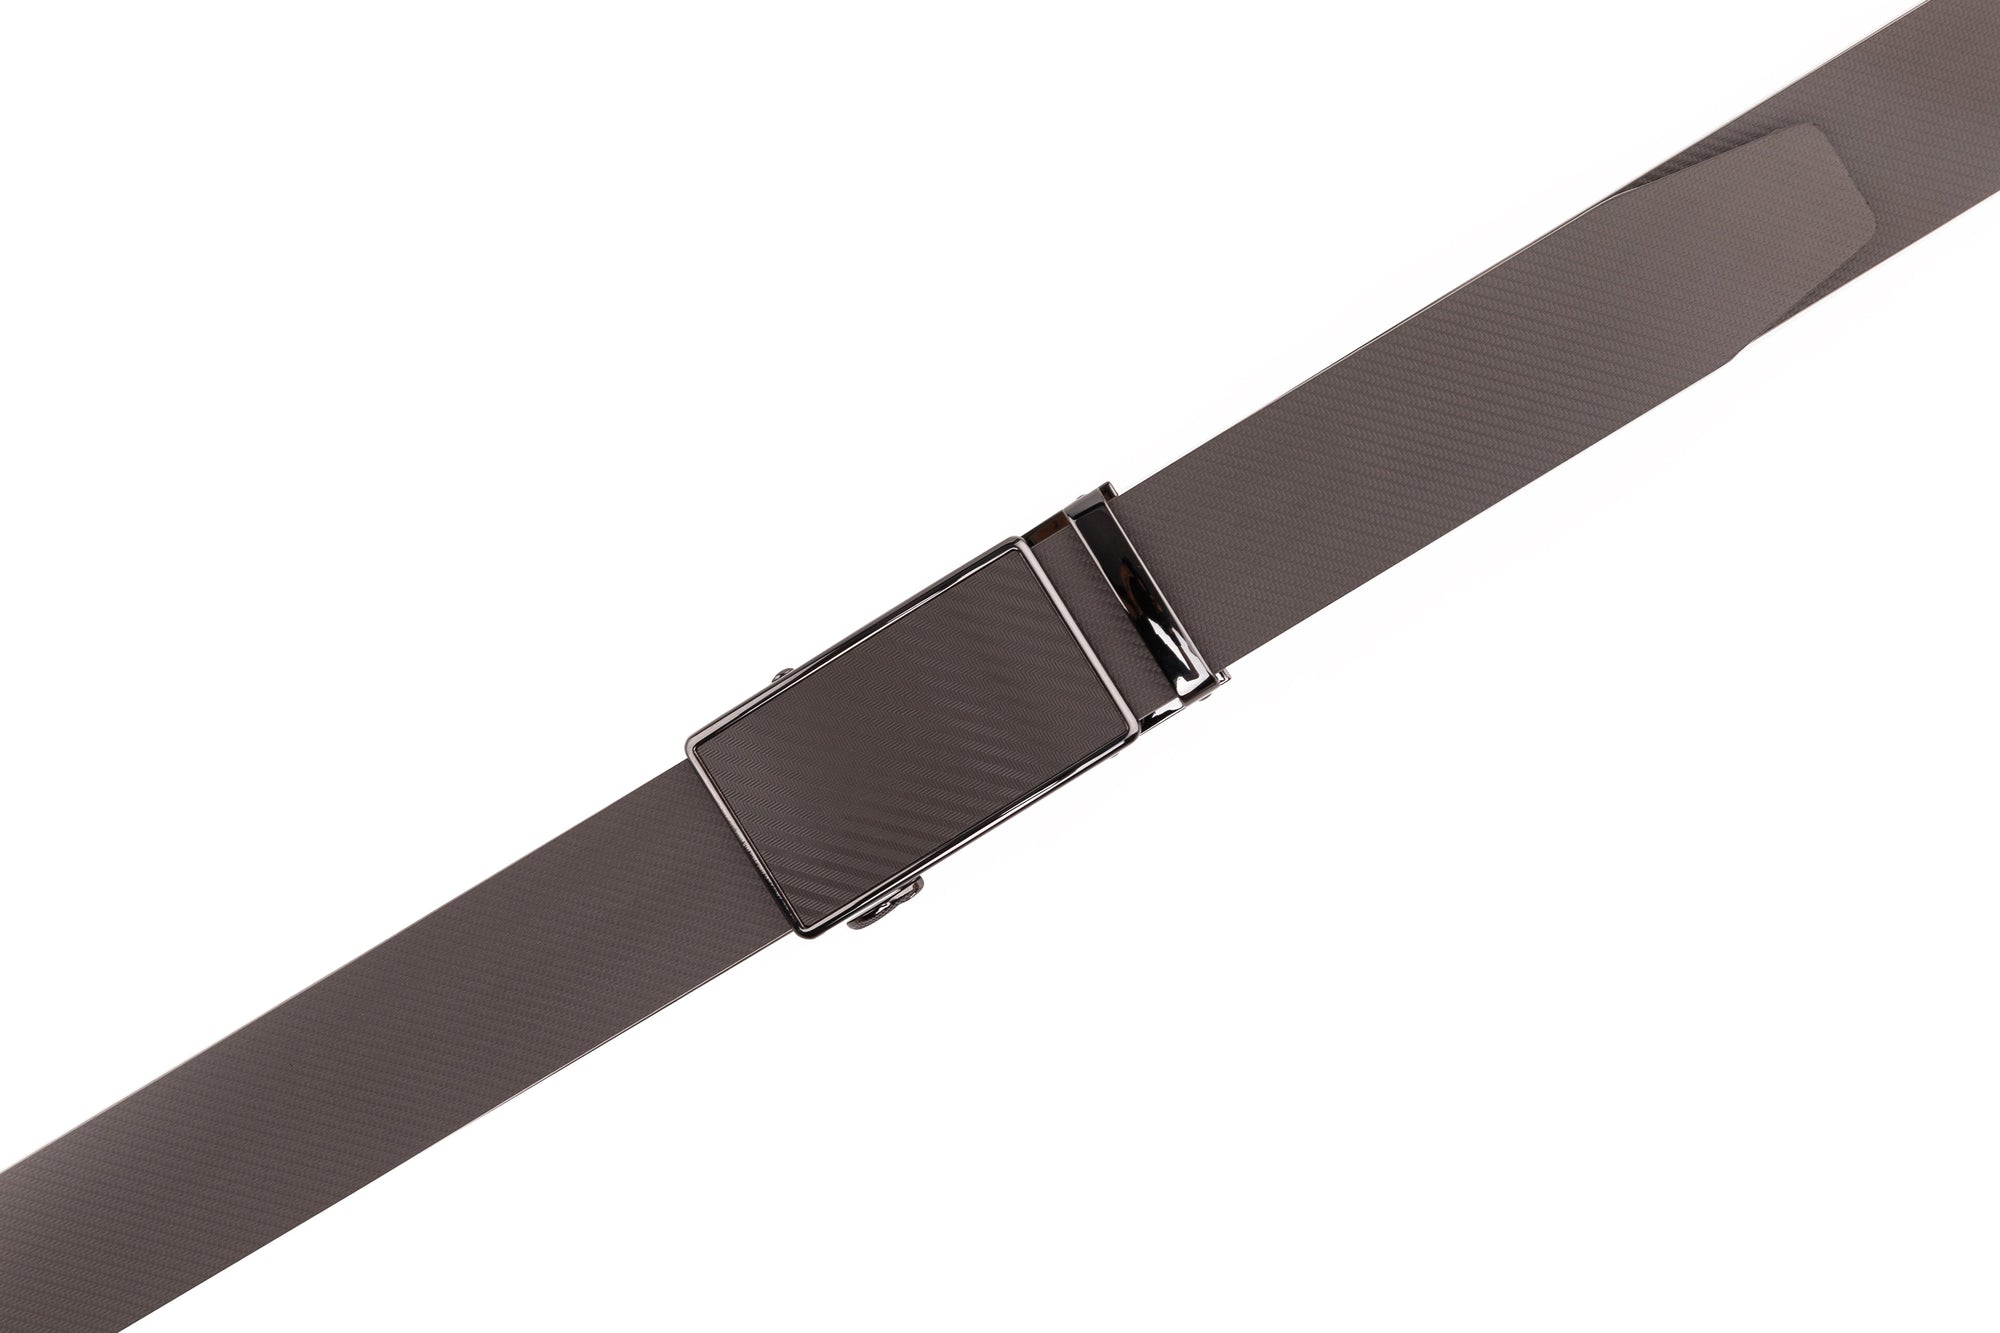 Men's Sliding Buckle Adjustable Leather Ratchet Belt Daily Haute